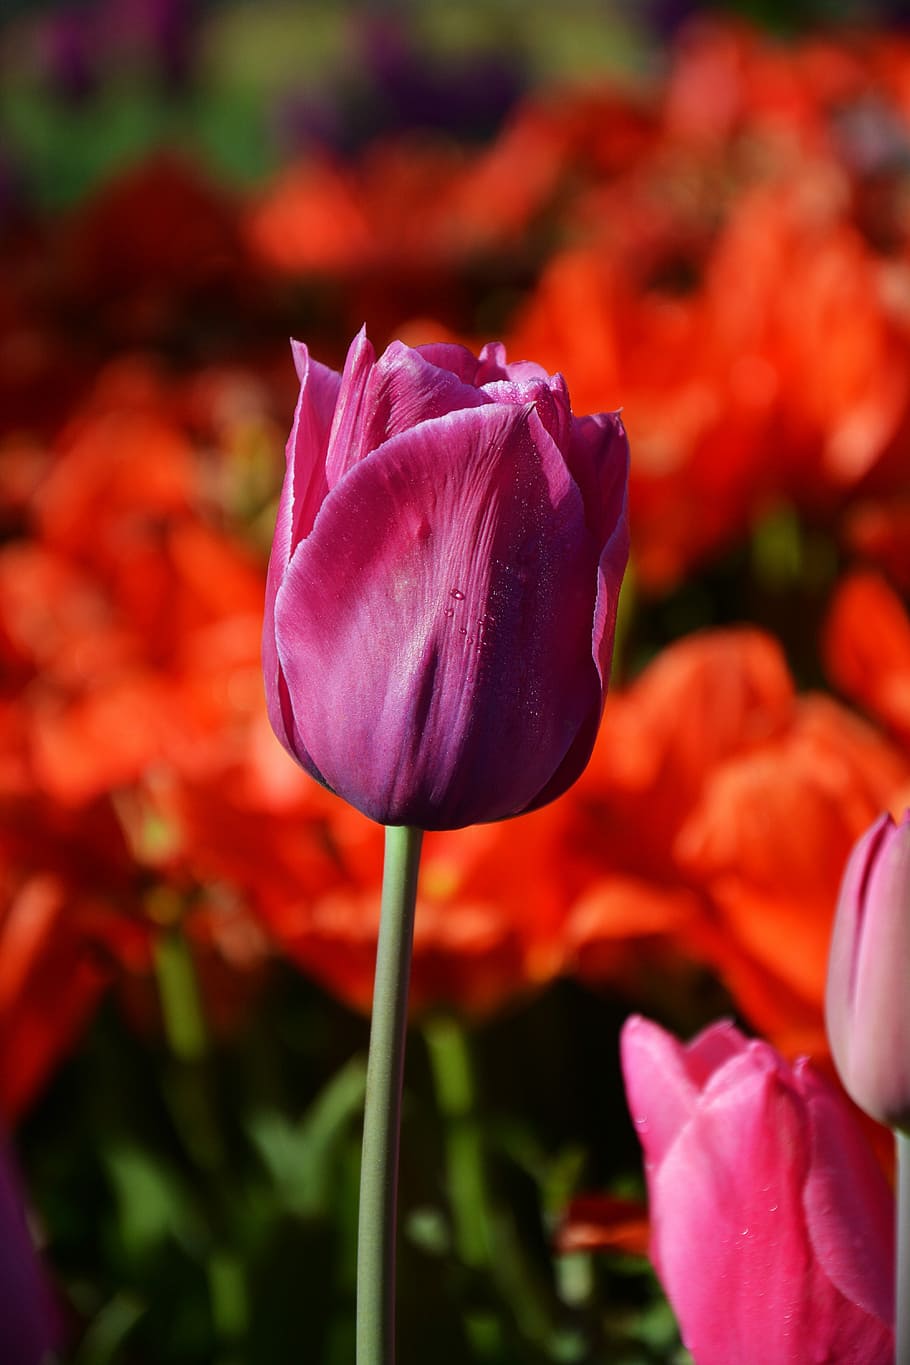 seletiva, foto de foco, roxa, rosa, tulipas, vermelho, macro, cores vivas, natureza, close-up